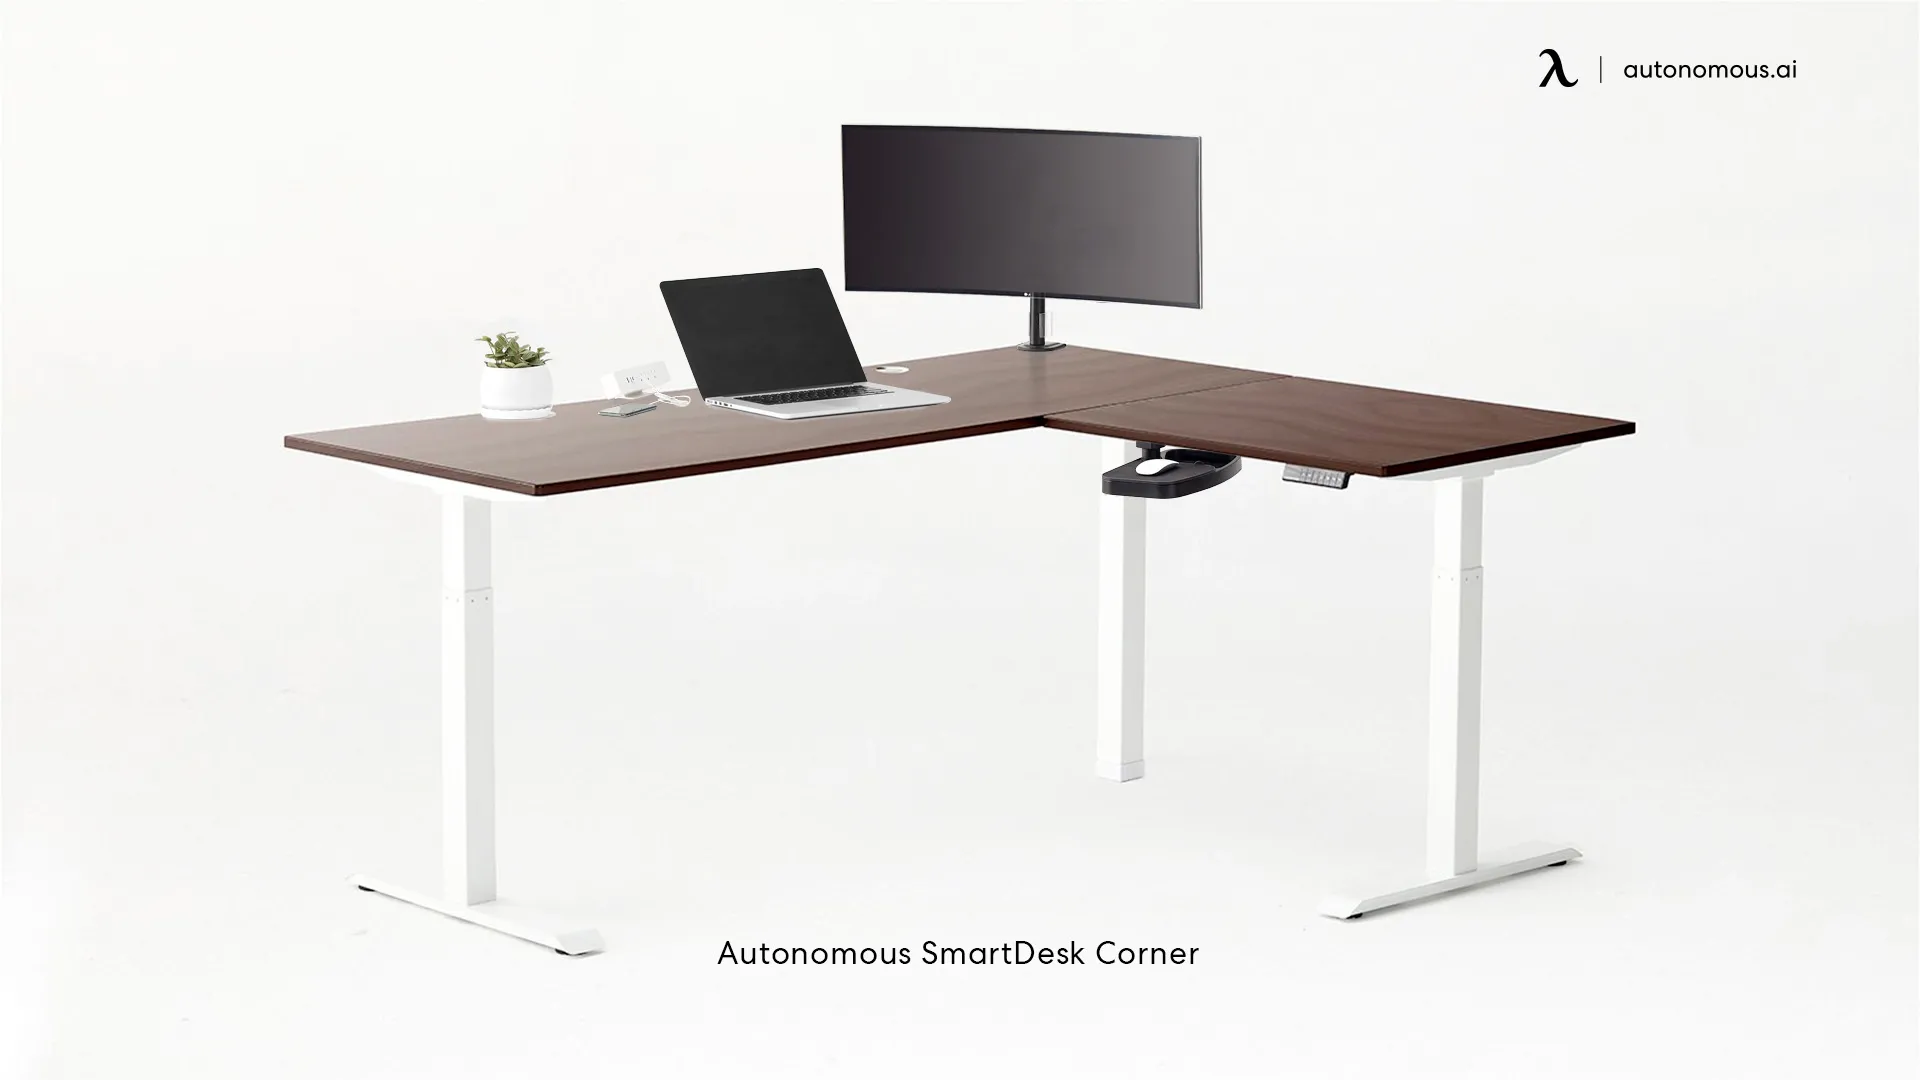 Autonomous SmartDesk Corner work from home desk